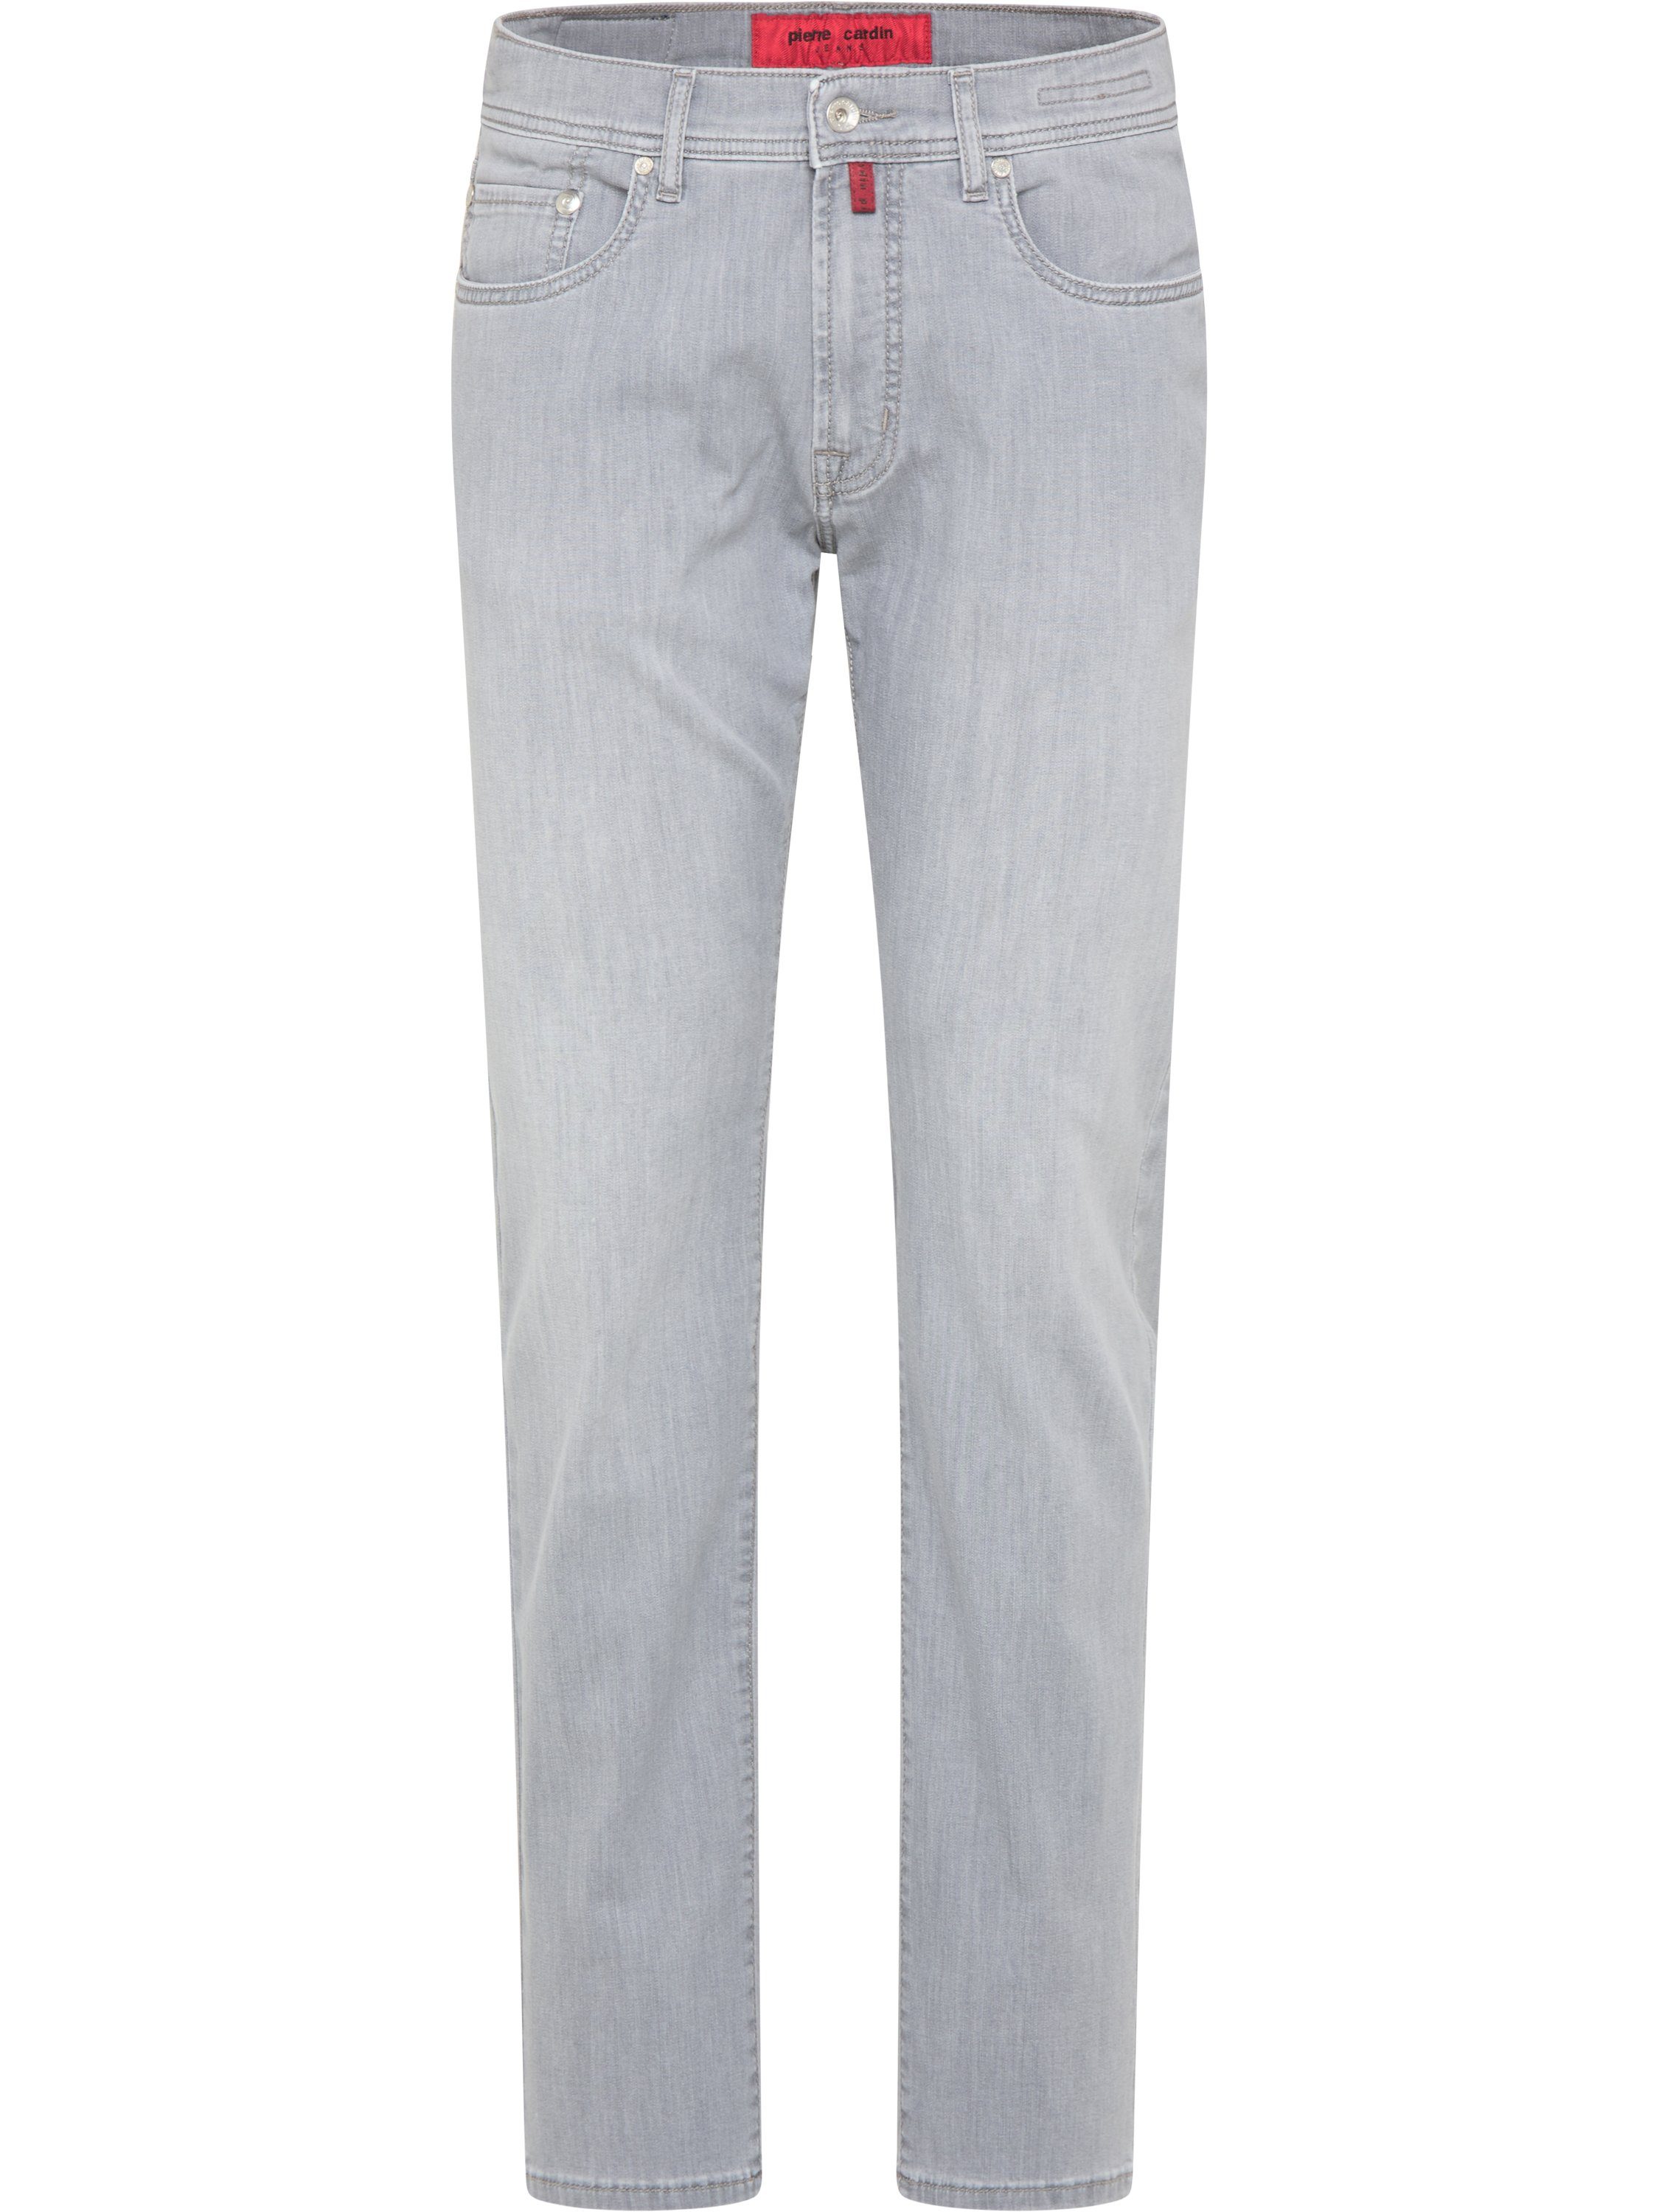 Pierre Cardin 5-Pocket-Jeans PIERRE CARDIN LYON AIRTOUCH light anthracite  3091 7389.81